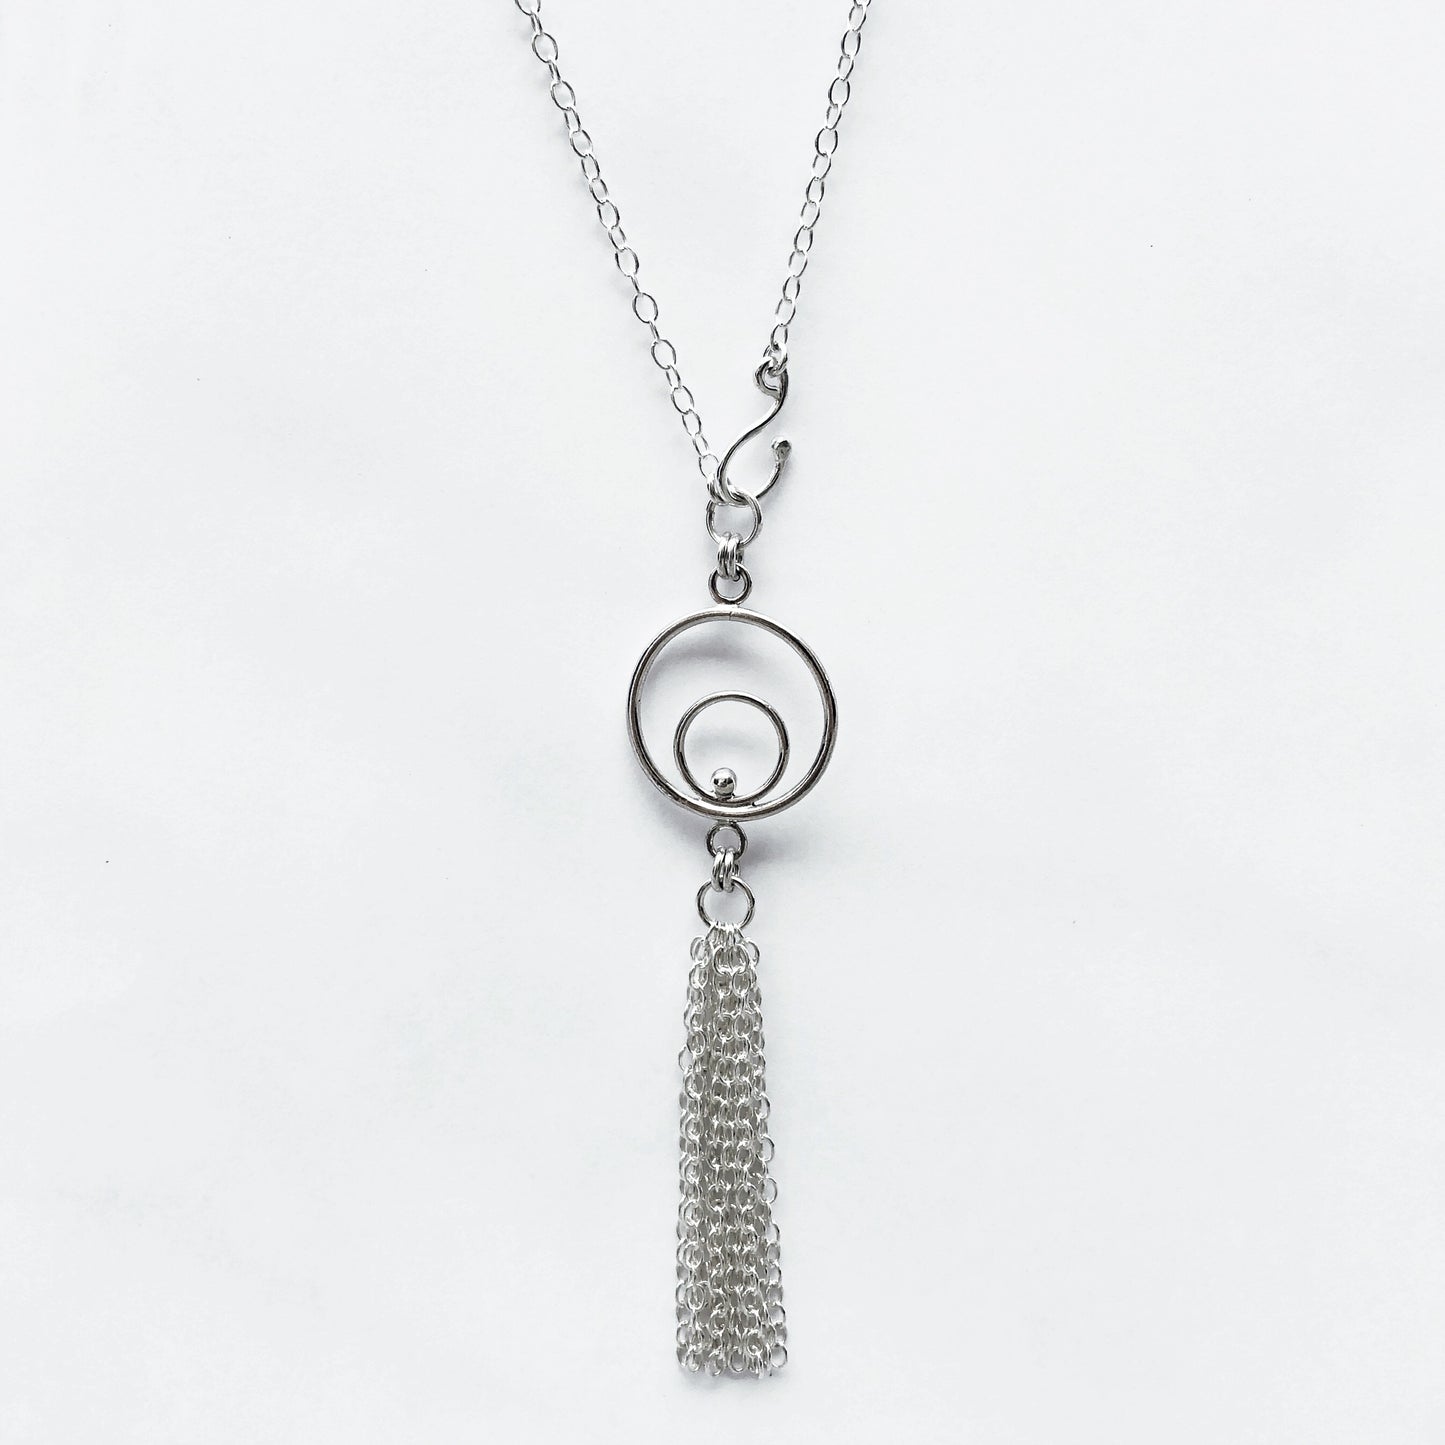 Silver tassel necklace